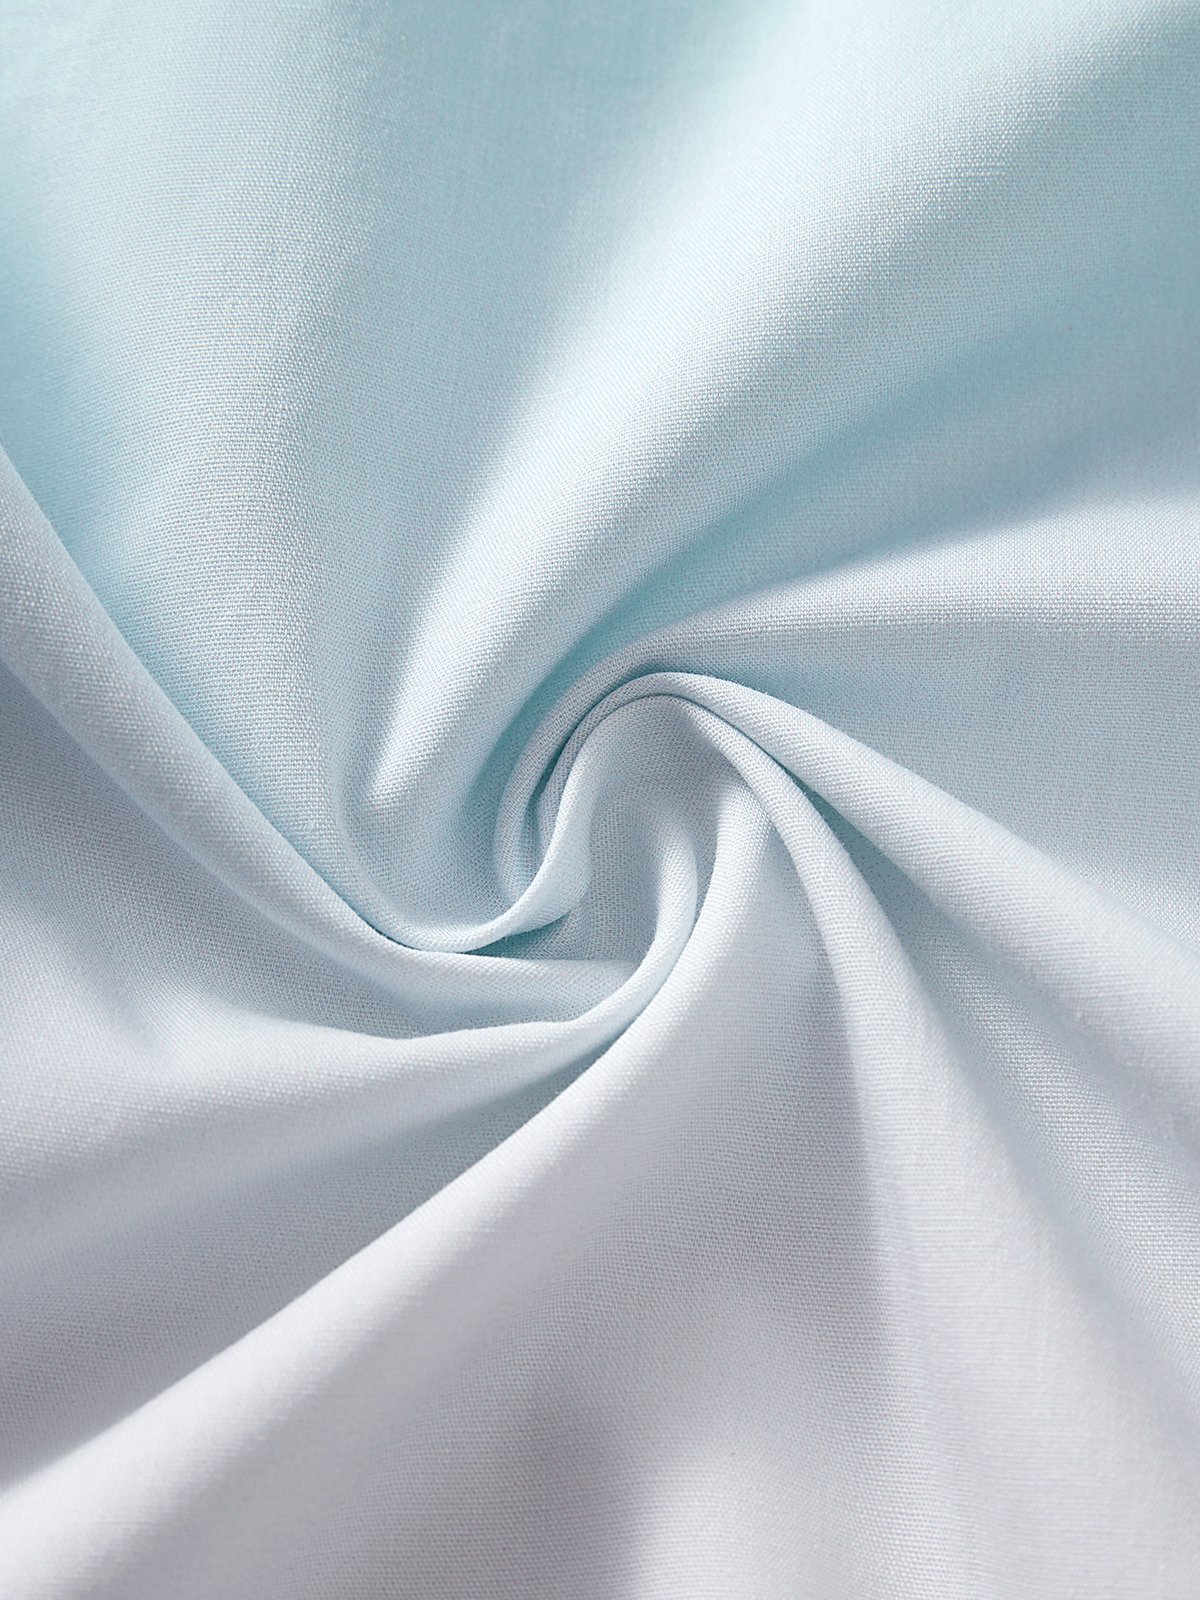 Hardaddy® Cotton Gradient Color Shirt